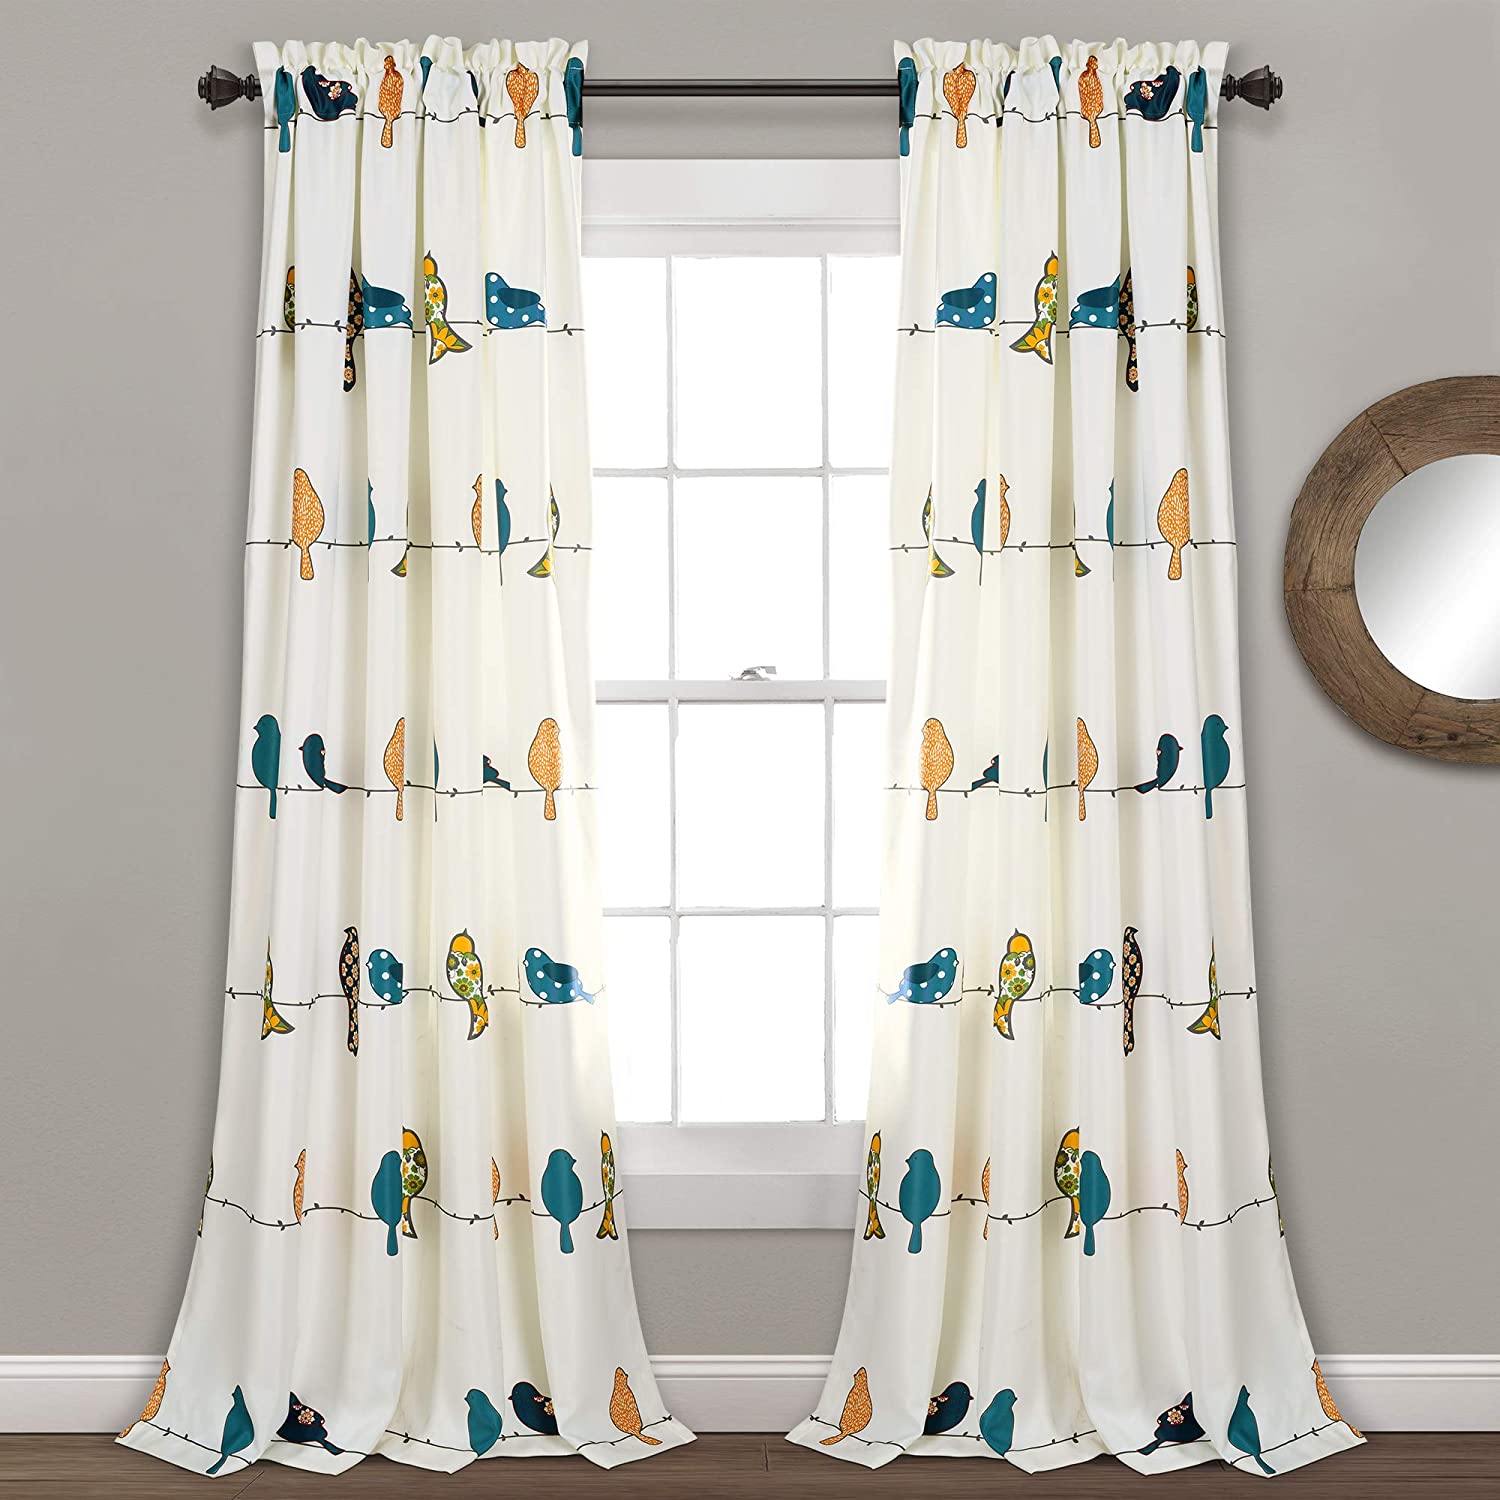 12. Lush Decor Rowley Birds Closet Curtains